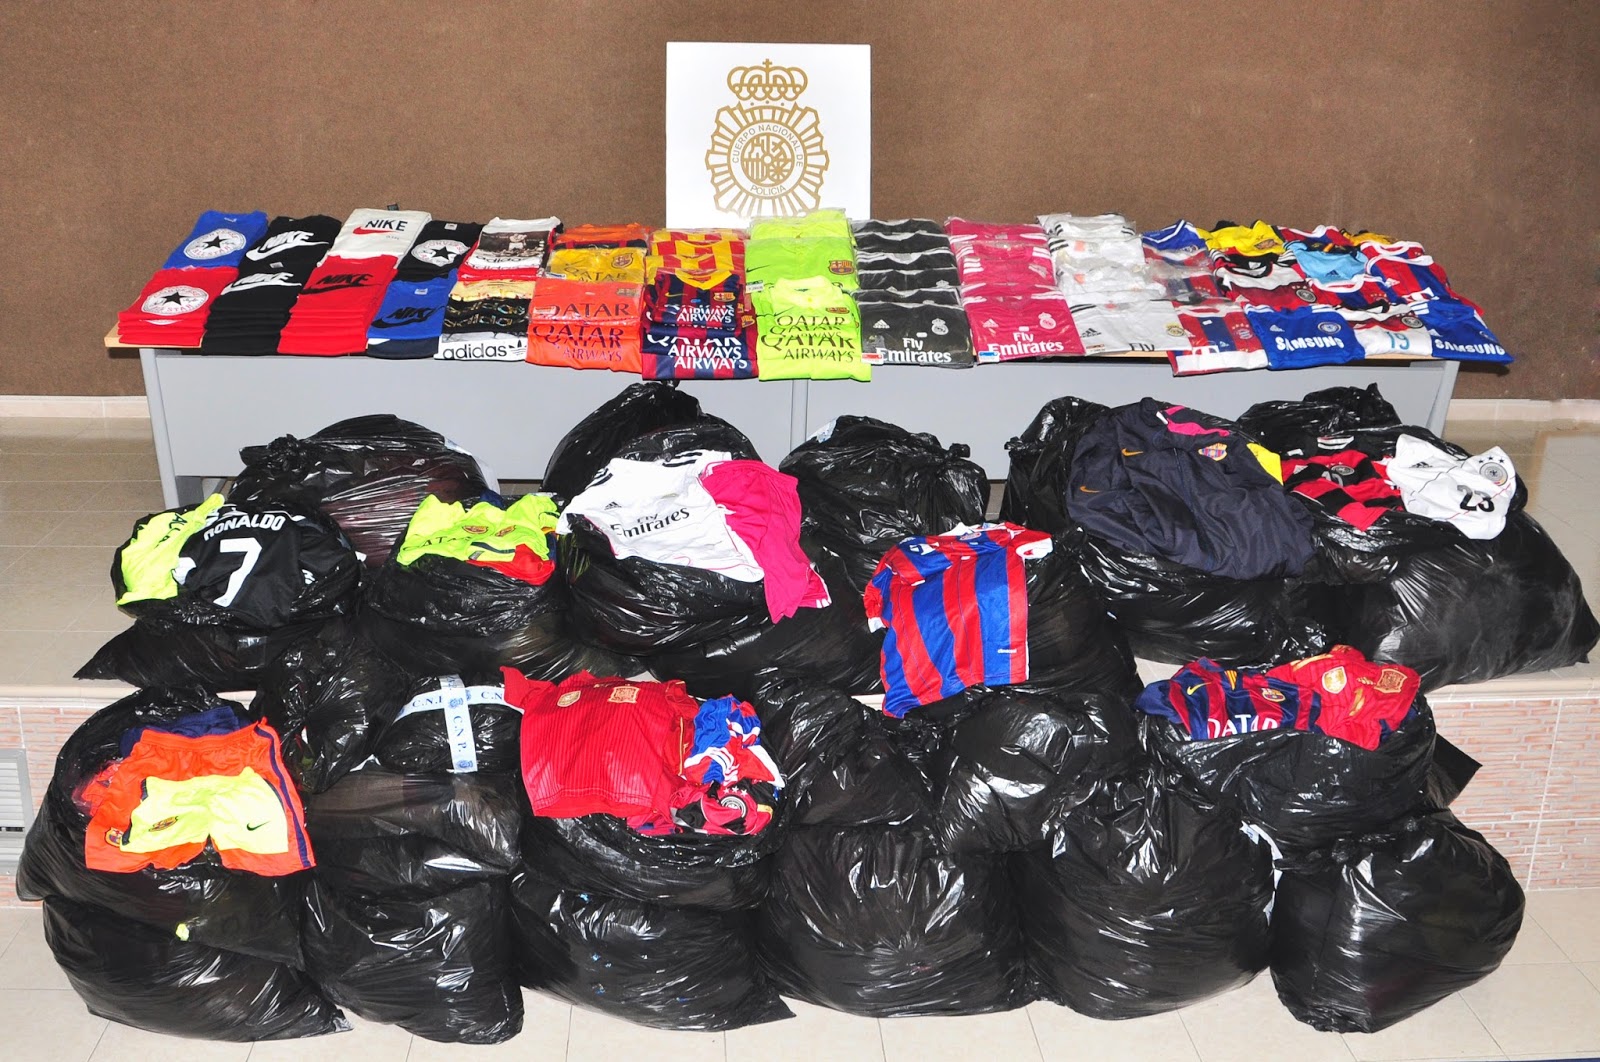 17 detenidos en Maspalomas por vender ropa deportiva falsificada.